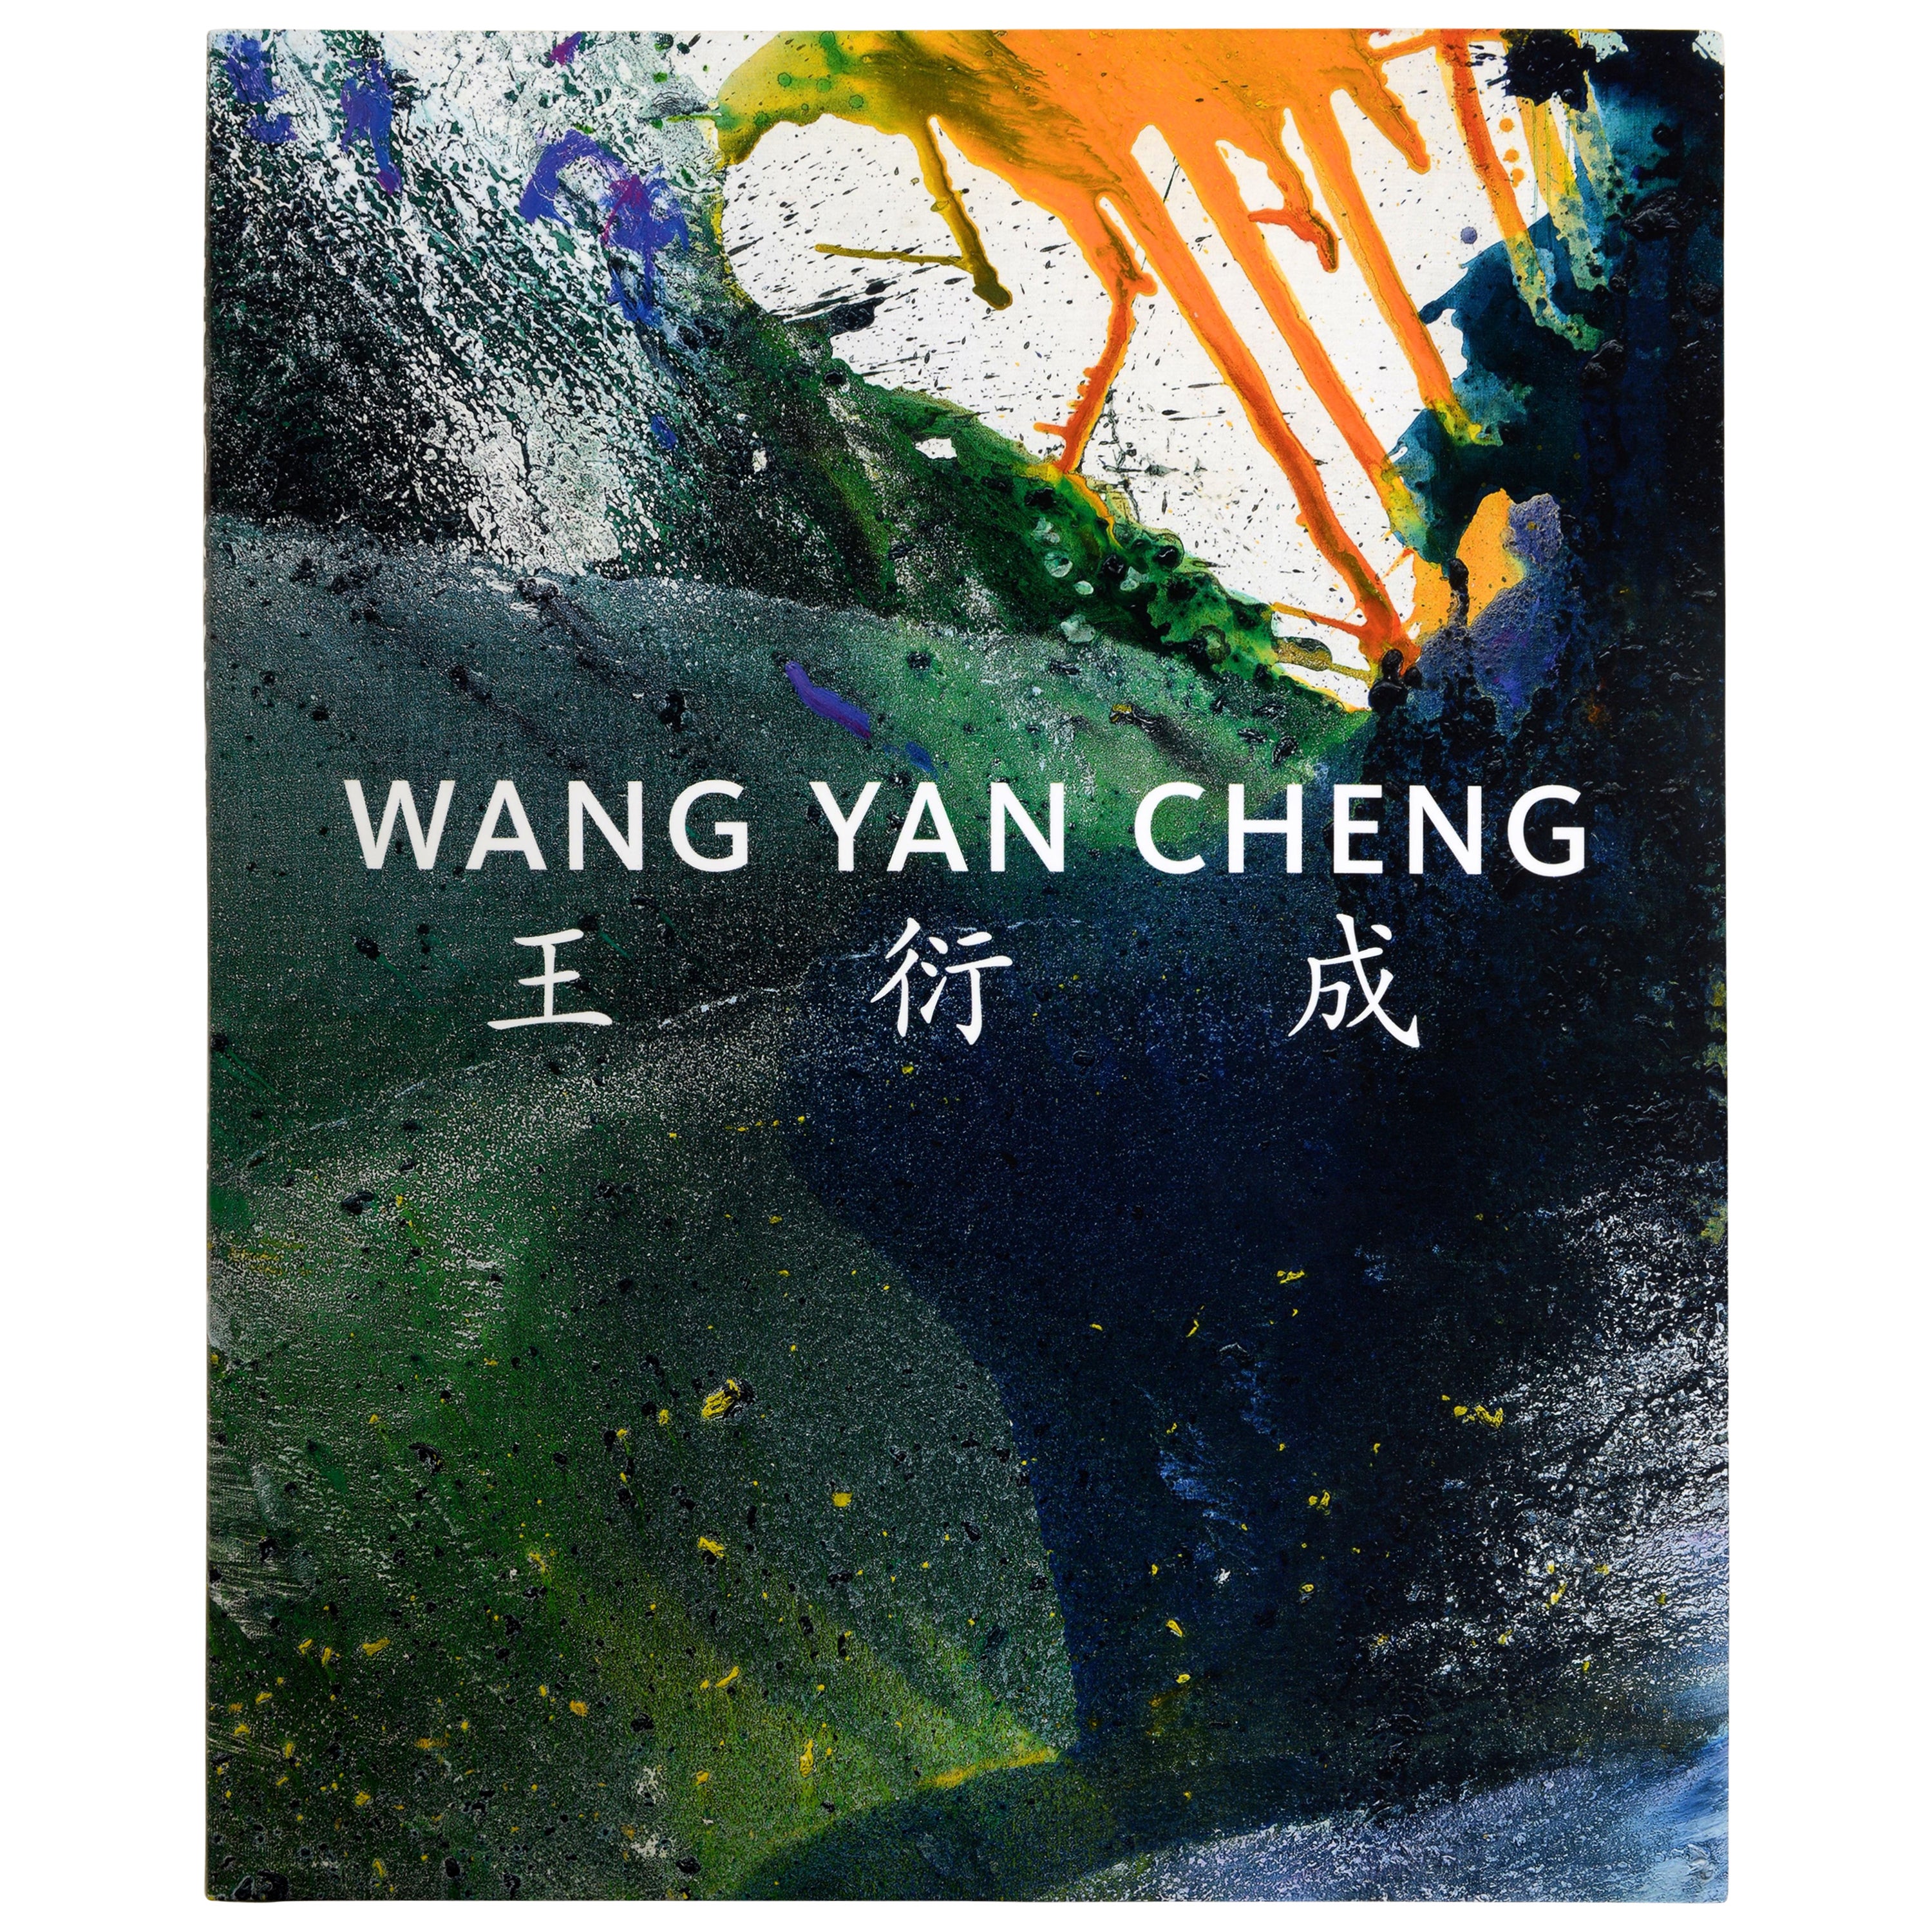 Wang Yan Cheng by Wang Yan Cheng, 1st Ed Exhibition Catalog For Sale